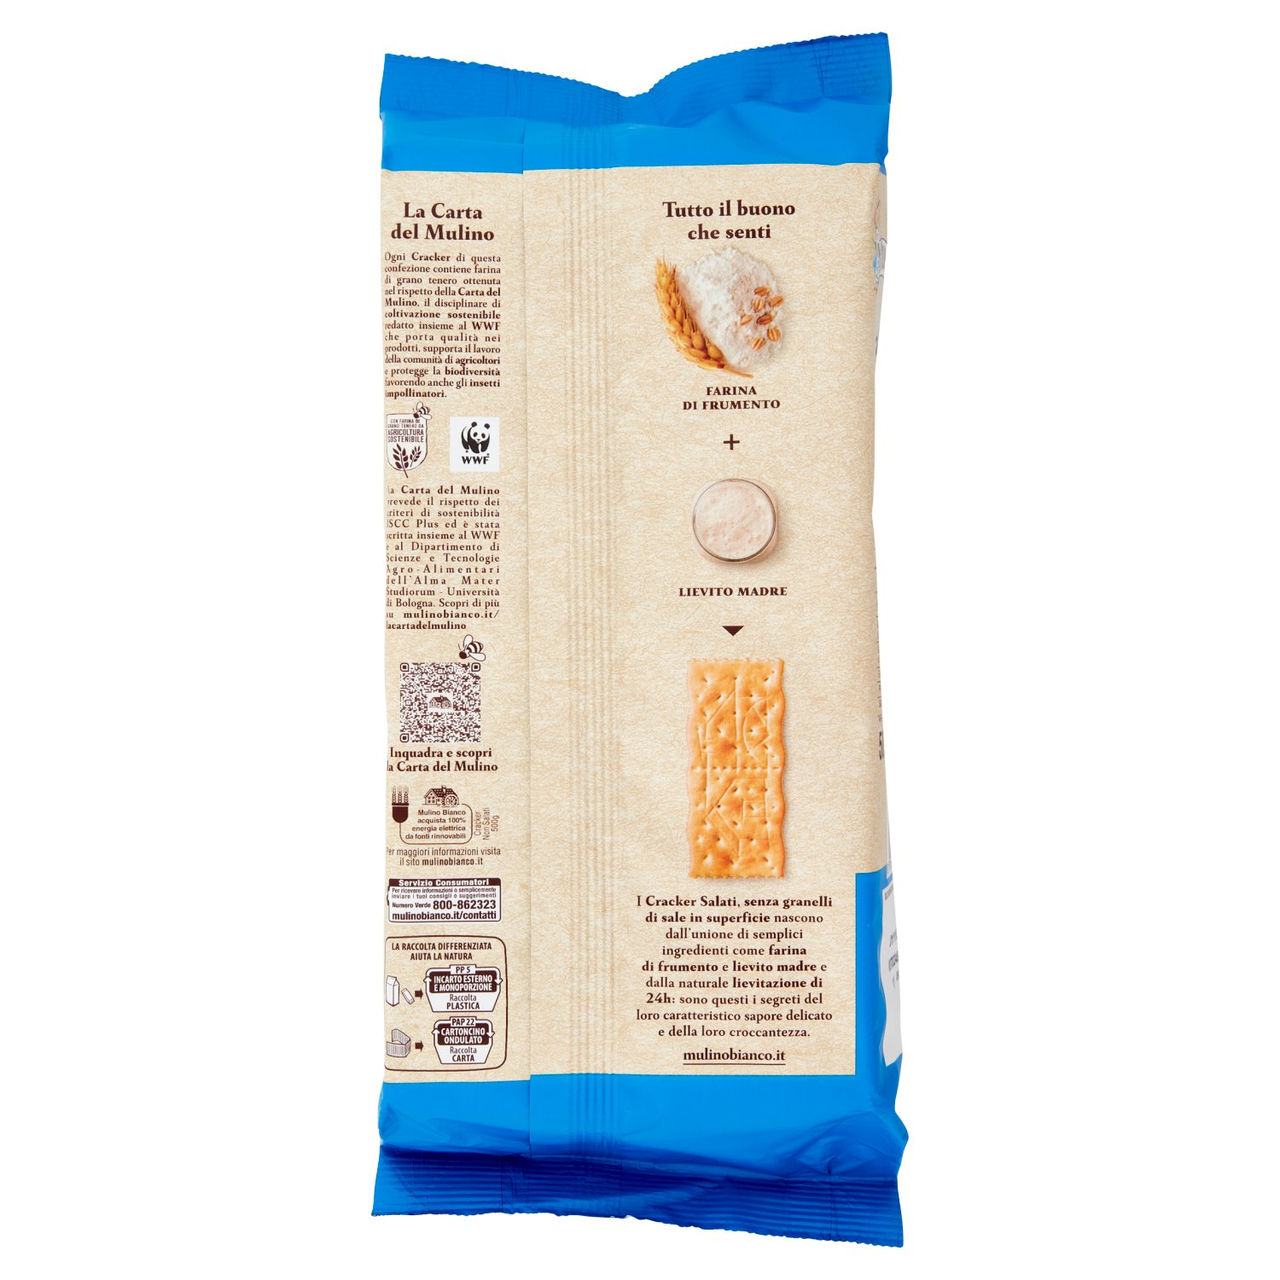 Mulino Bianco Cracker non Salati vendita online